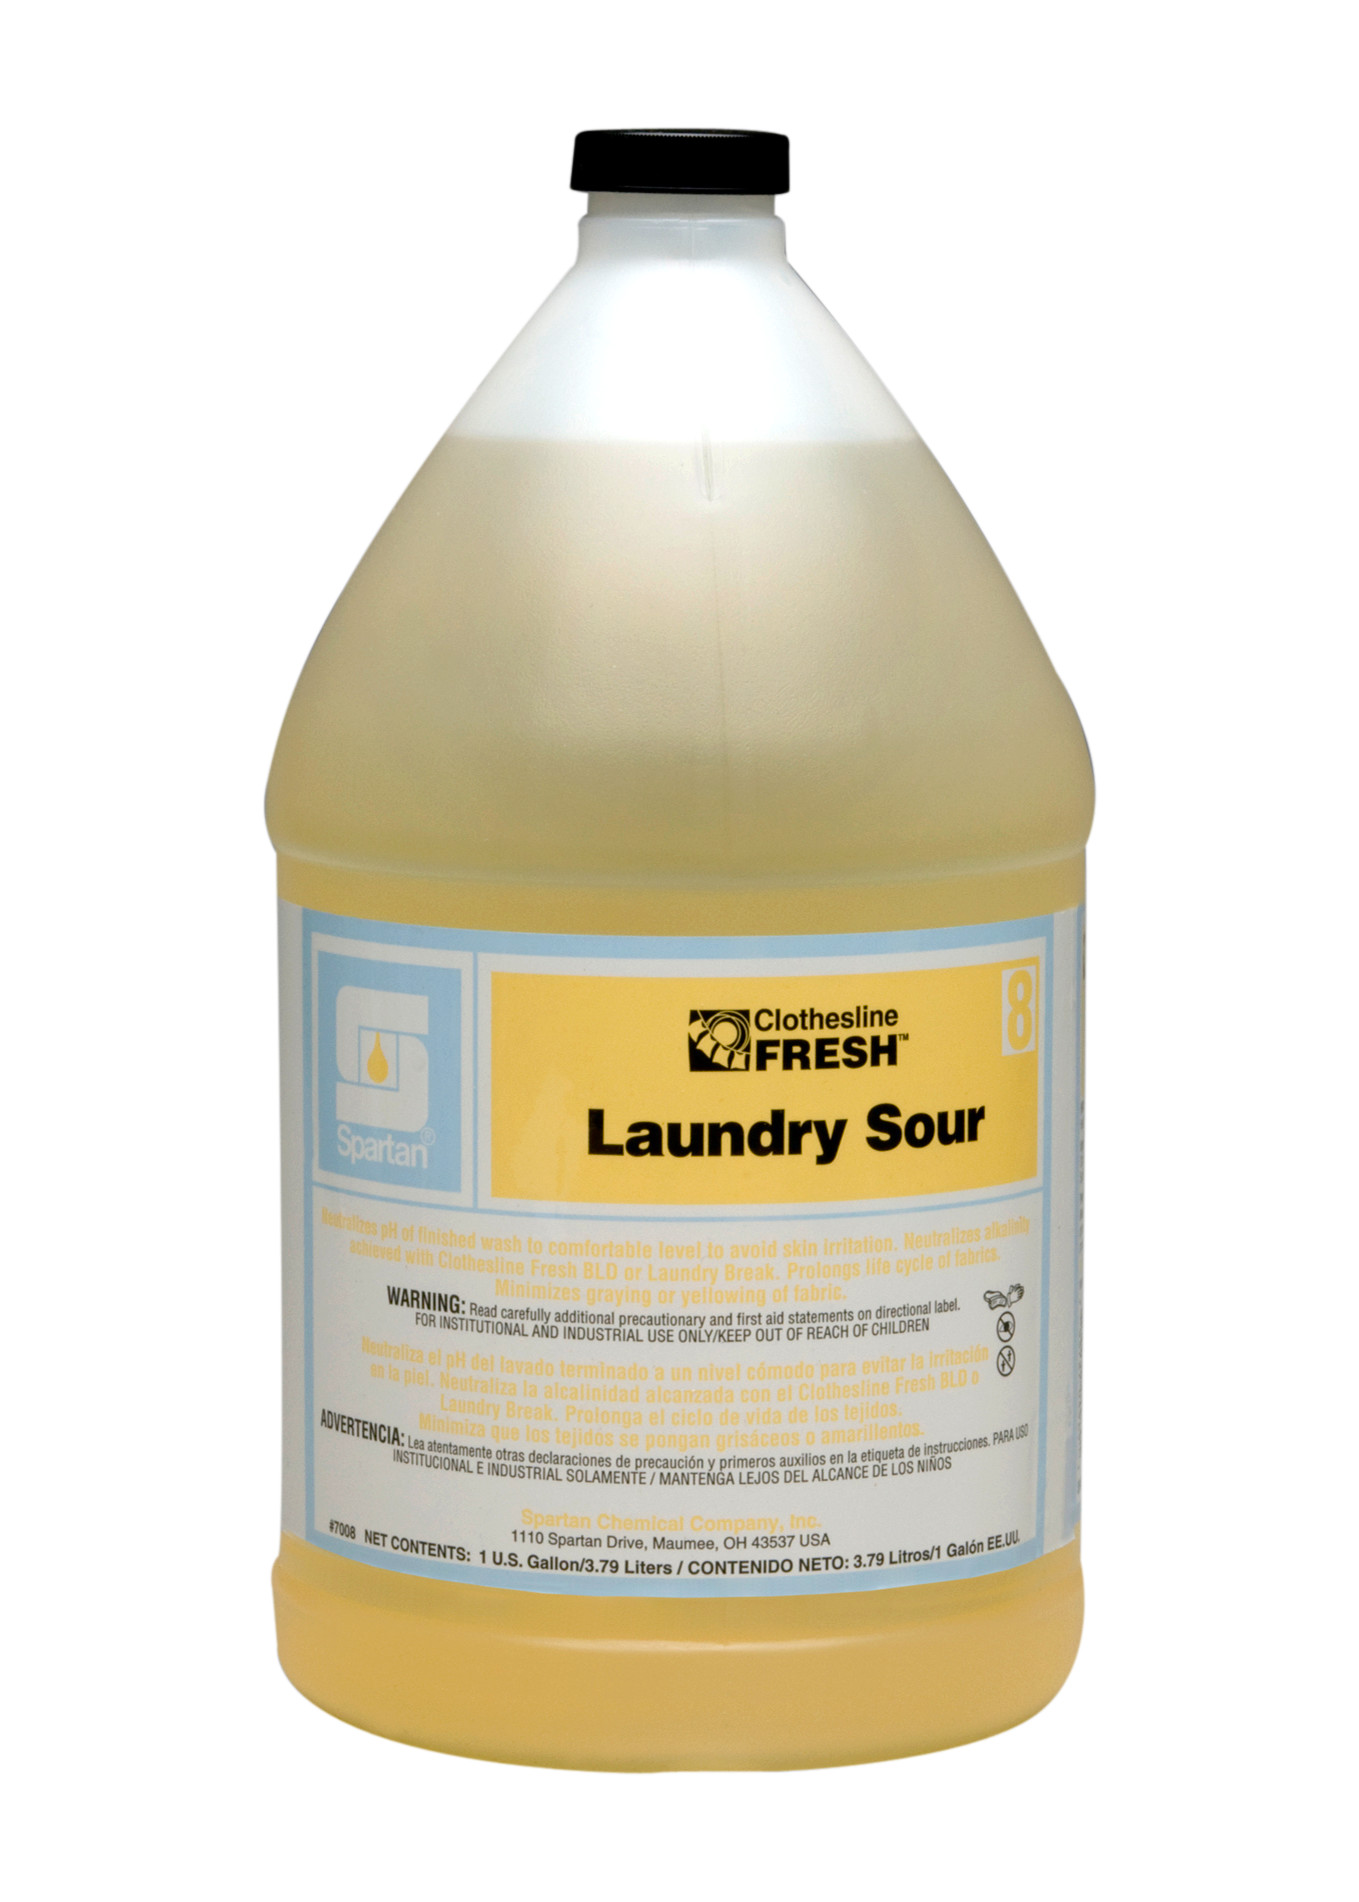 Spartan Chemical Company Clothesline Fresh Laundry Sour 8, 1 GAL 4/CSE